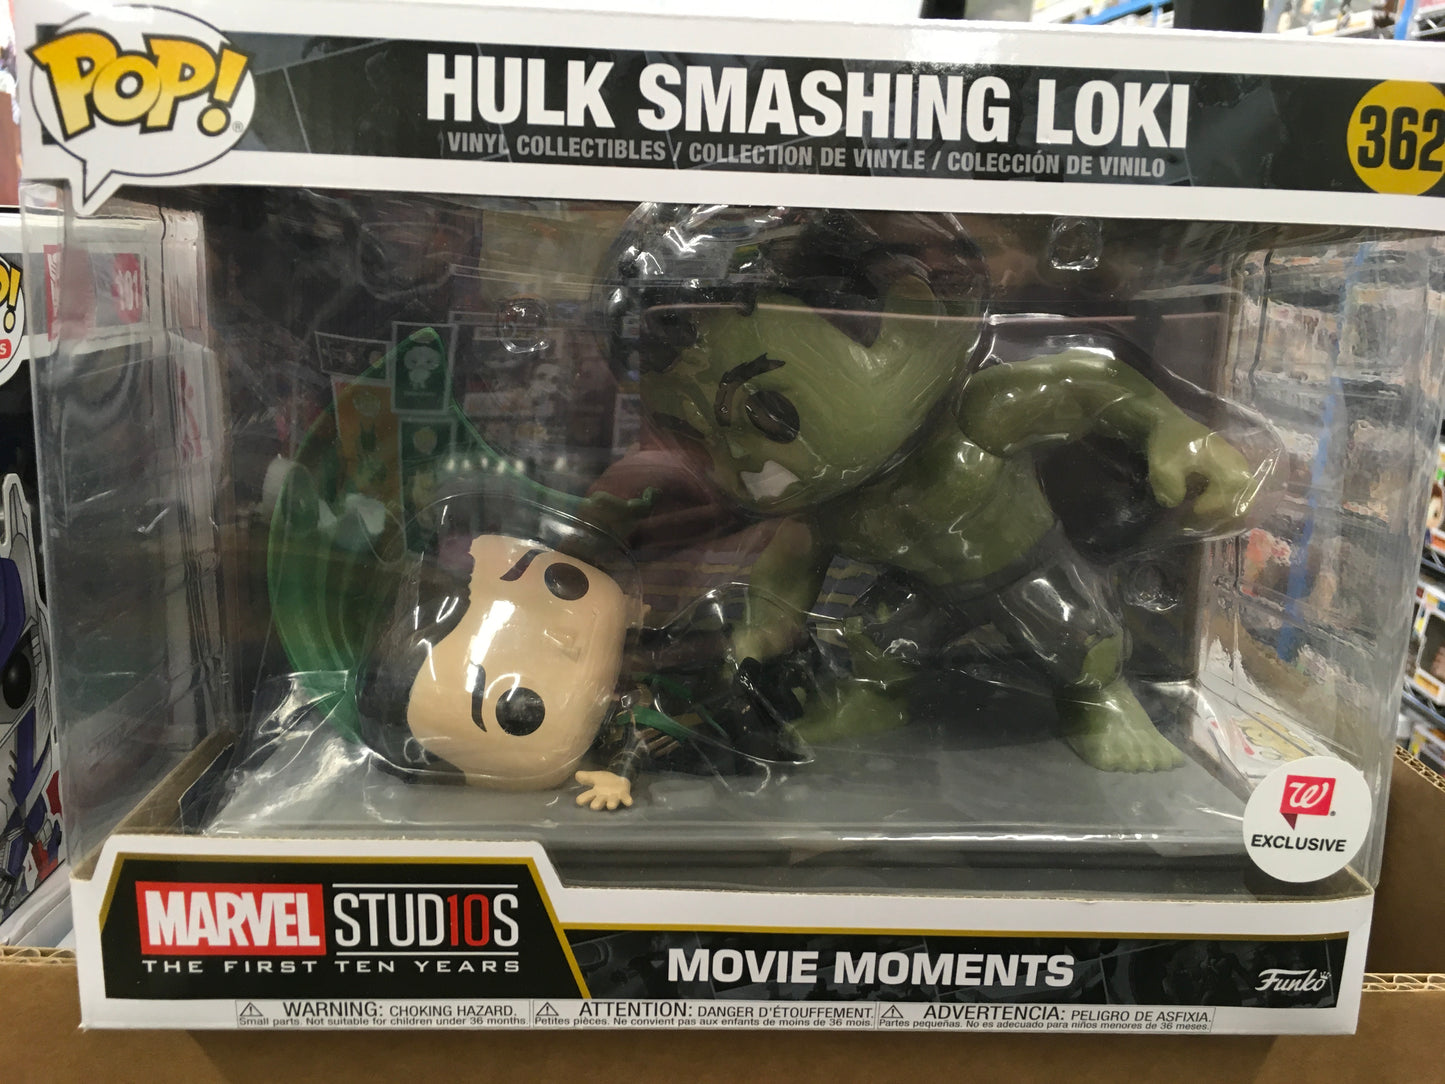 Hulk Smashing Loki exclusive movie moments Funko Pop! Vinyl figure 2020